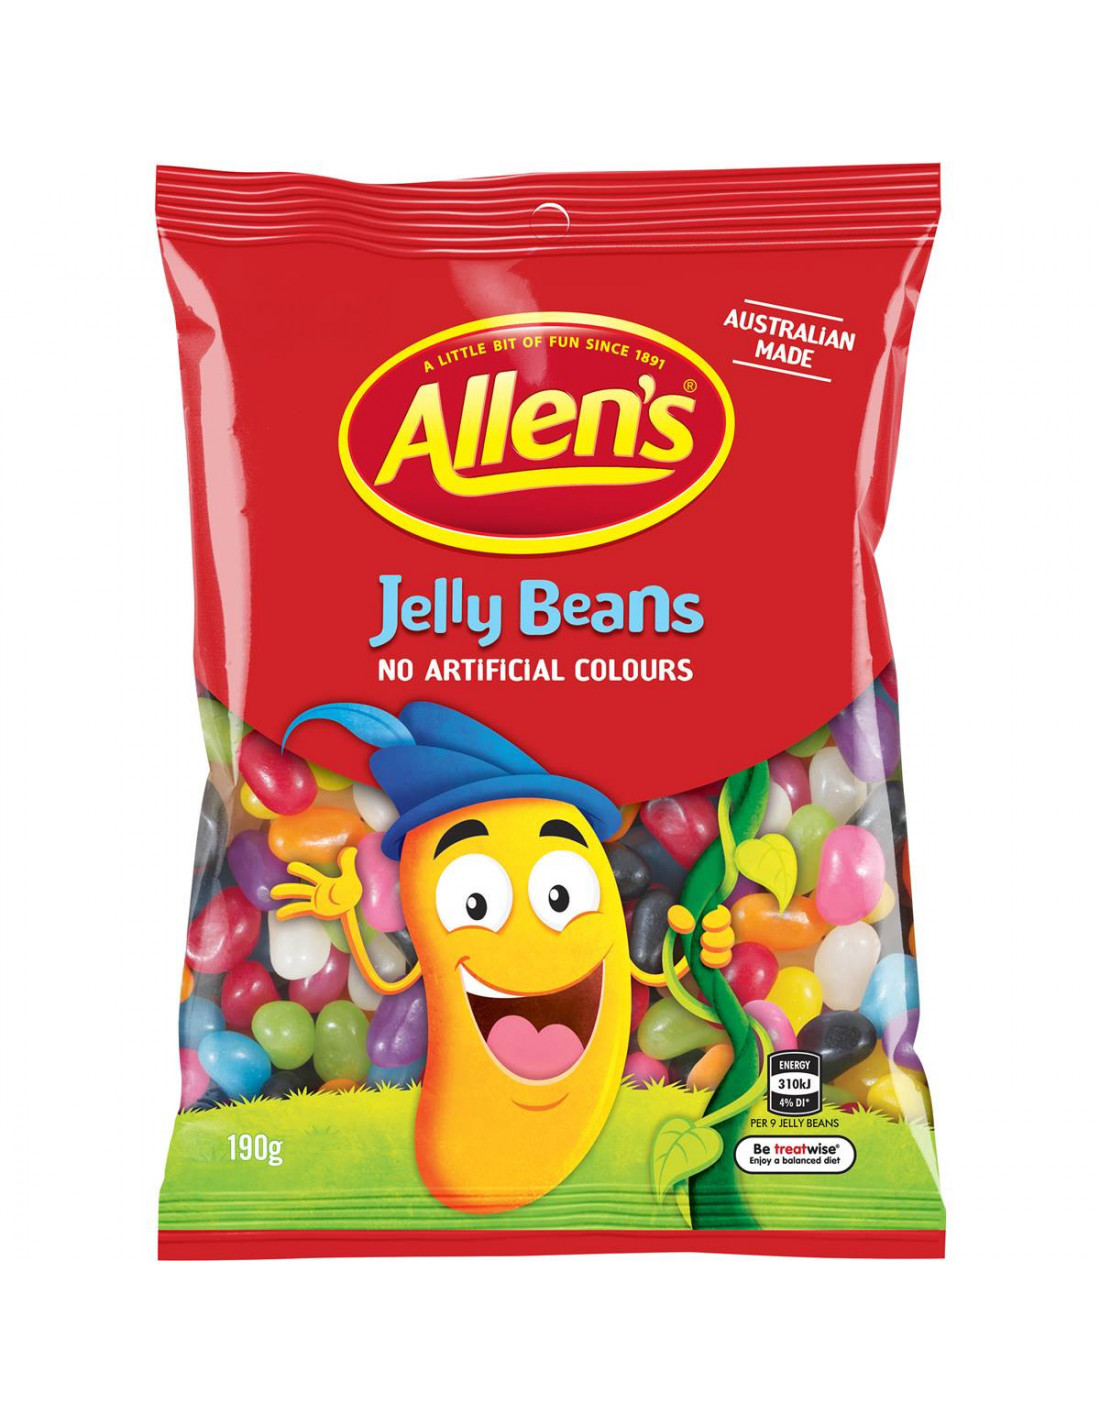 bag　Direct　Allen's　Beans　Jelly　Australia　190g　Ally's　Basket　from